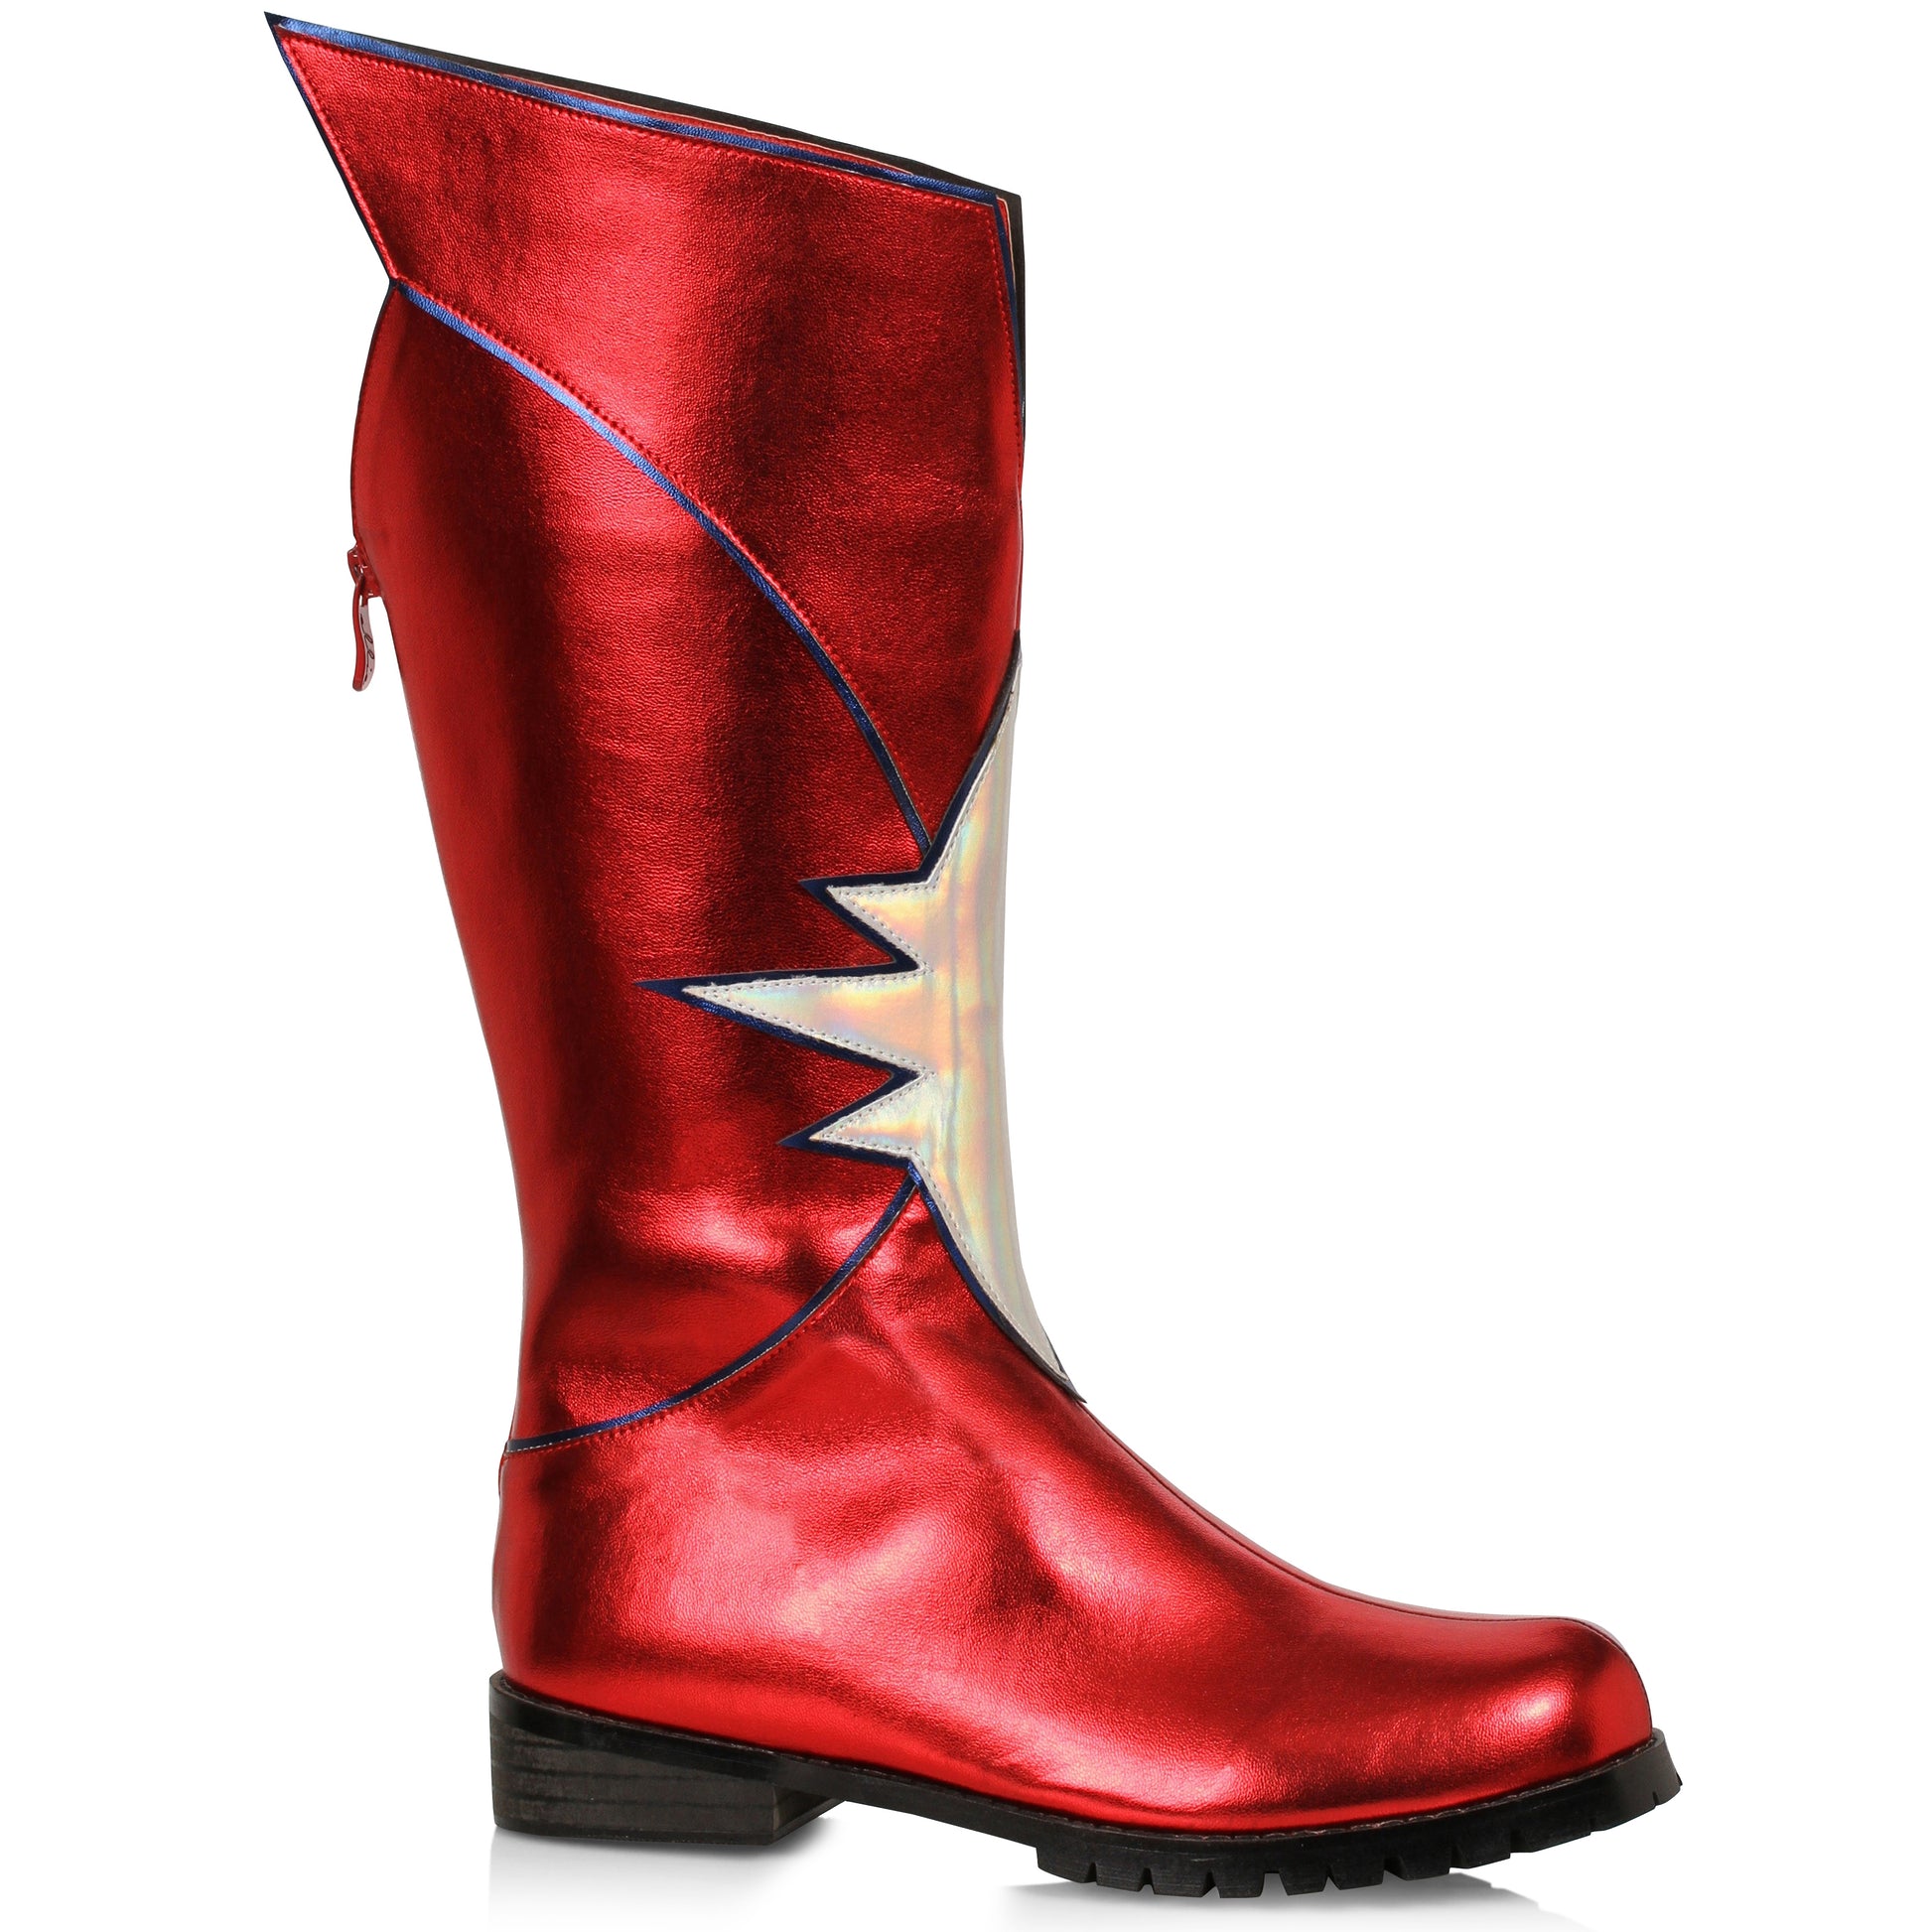 158-VALOR 1031 Shoes 1.5" Men's Superhero Knee High Boot FLATS KNEE HIGH